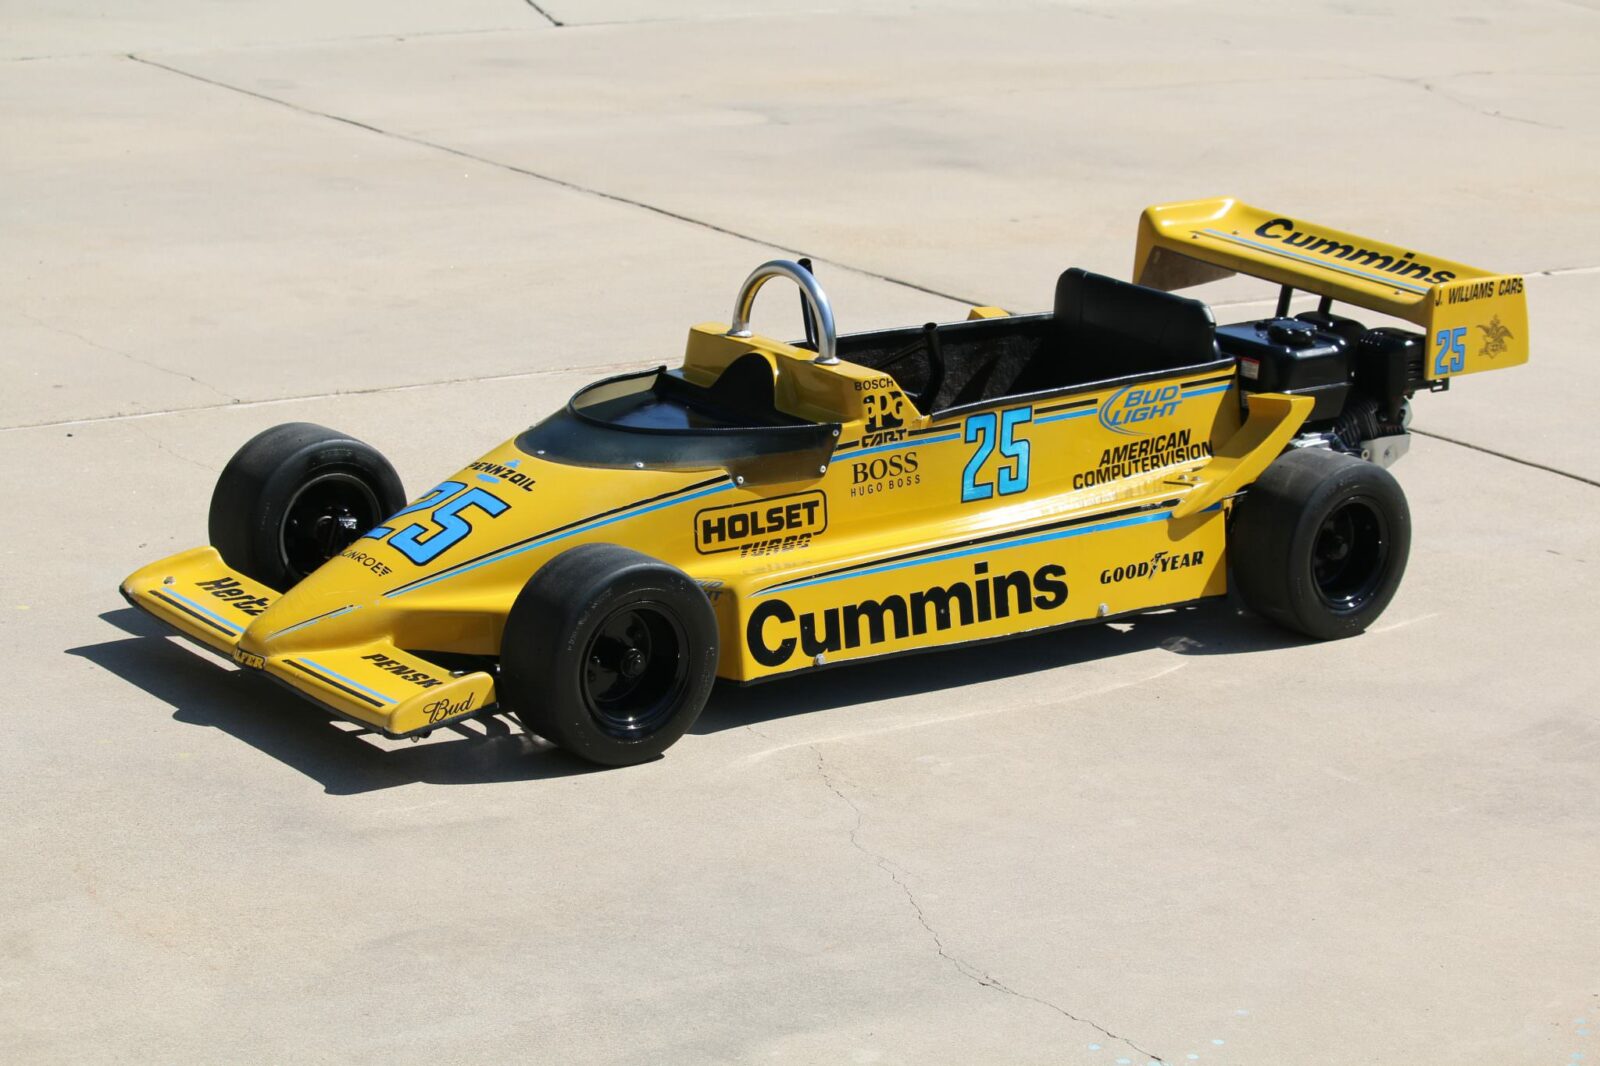 Go Kart Replica 1987 Indianapolis 500 March-Cosworth